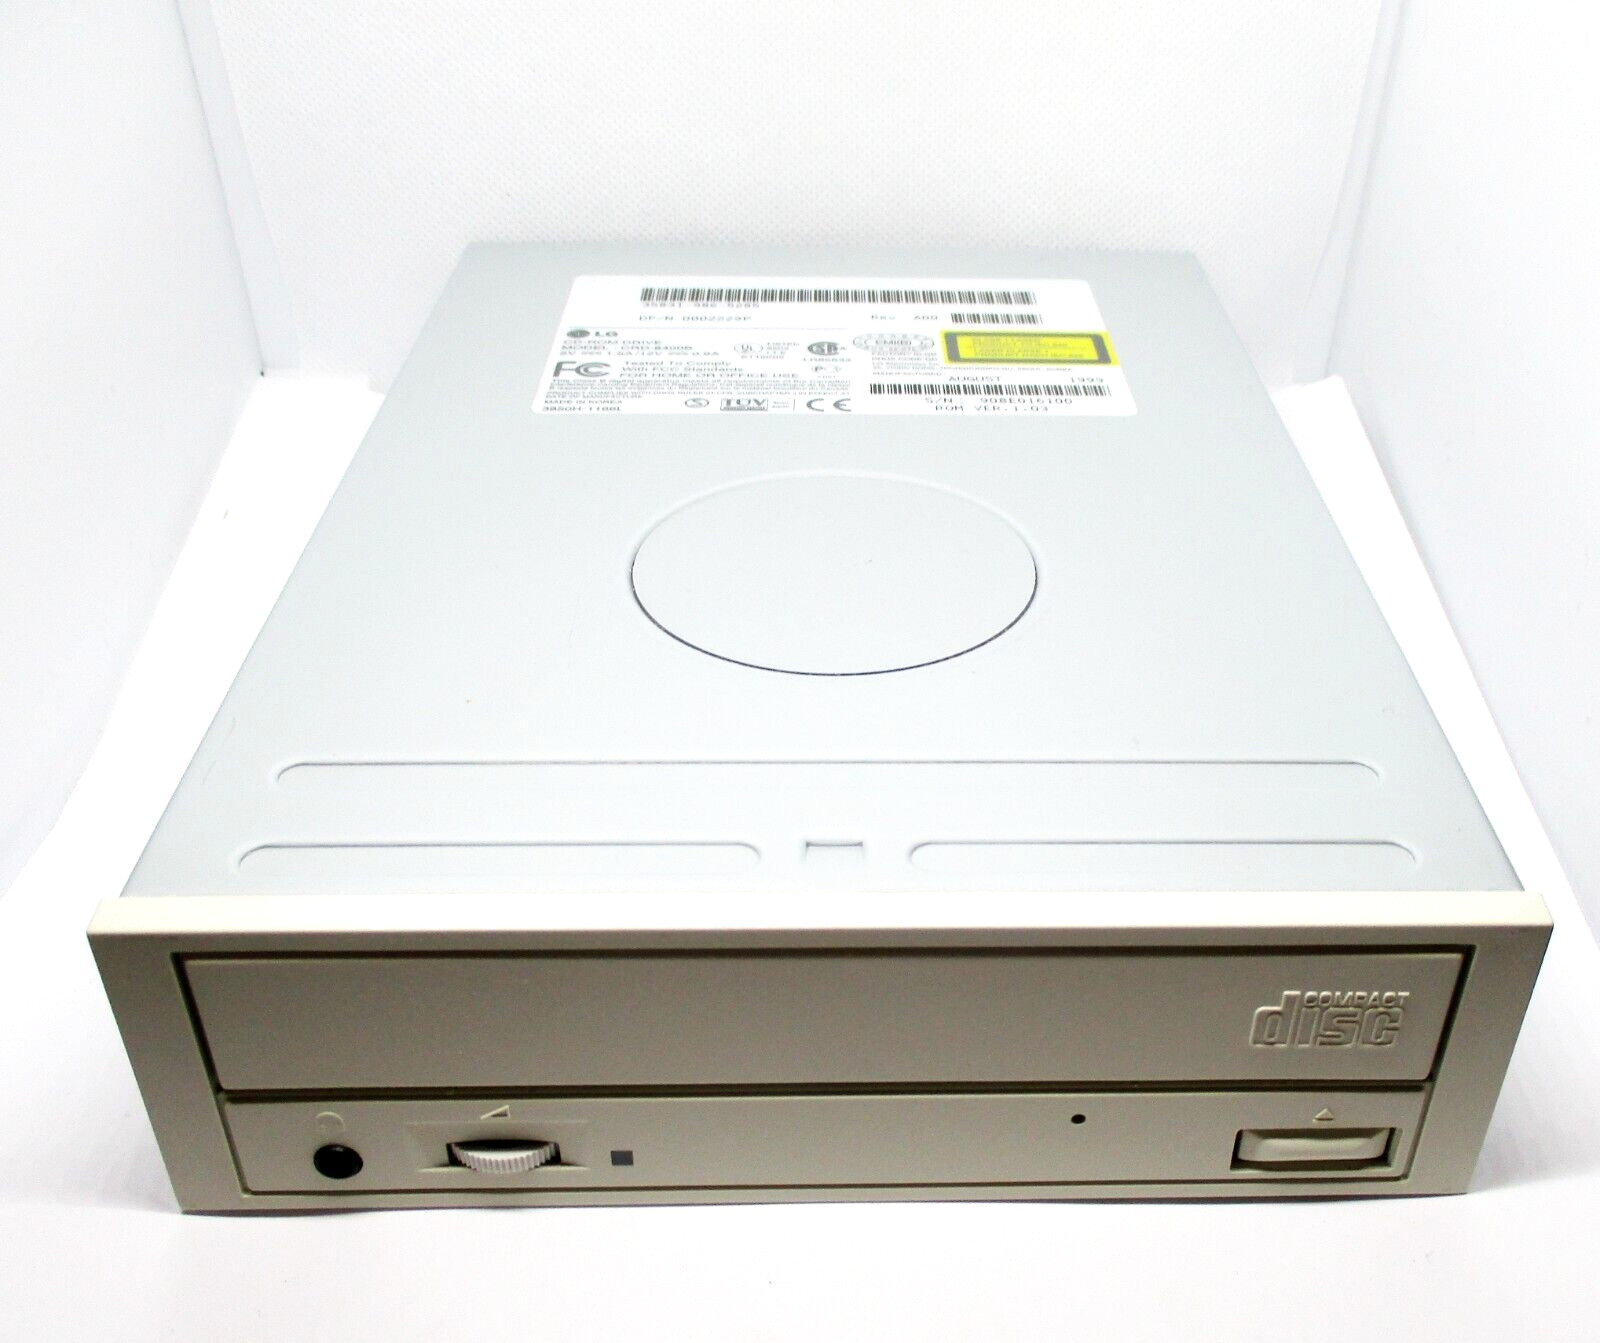 LG CD-ROM Drive Internal CD-ROM DRIVE MODEL CRD-8400B DP/N:0002229P Vintage